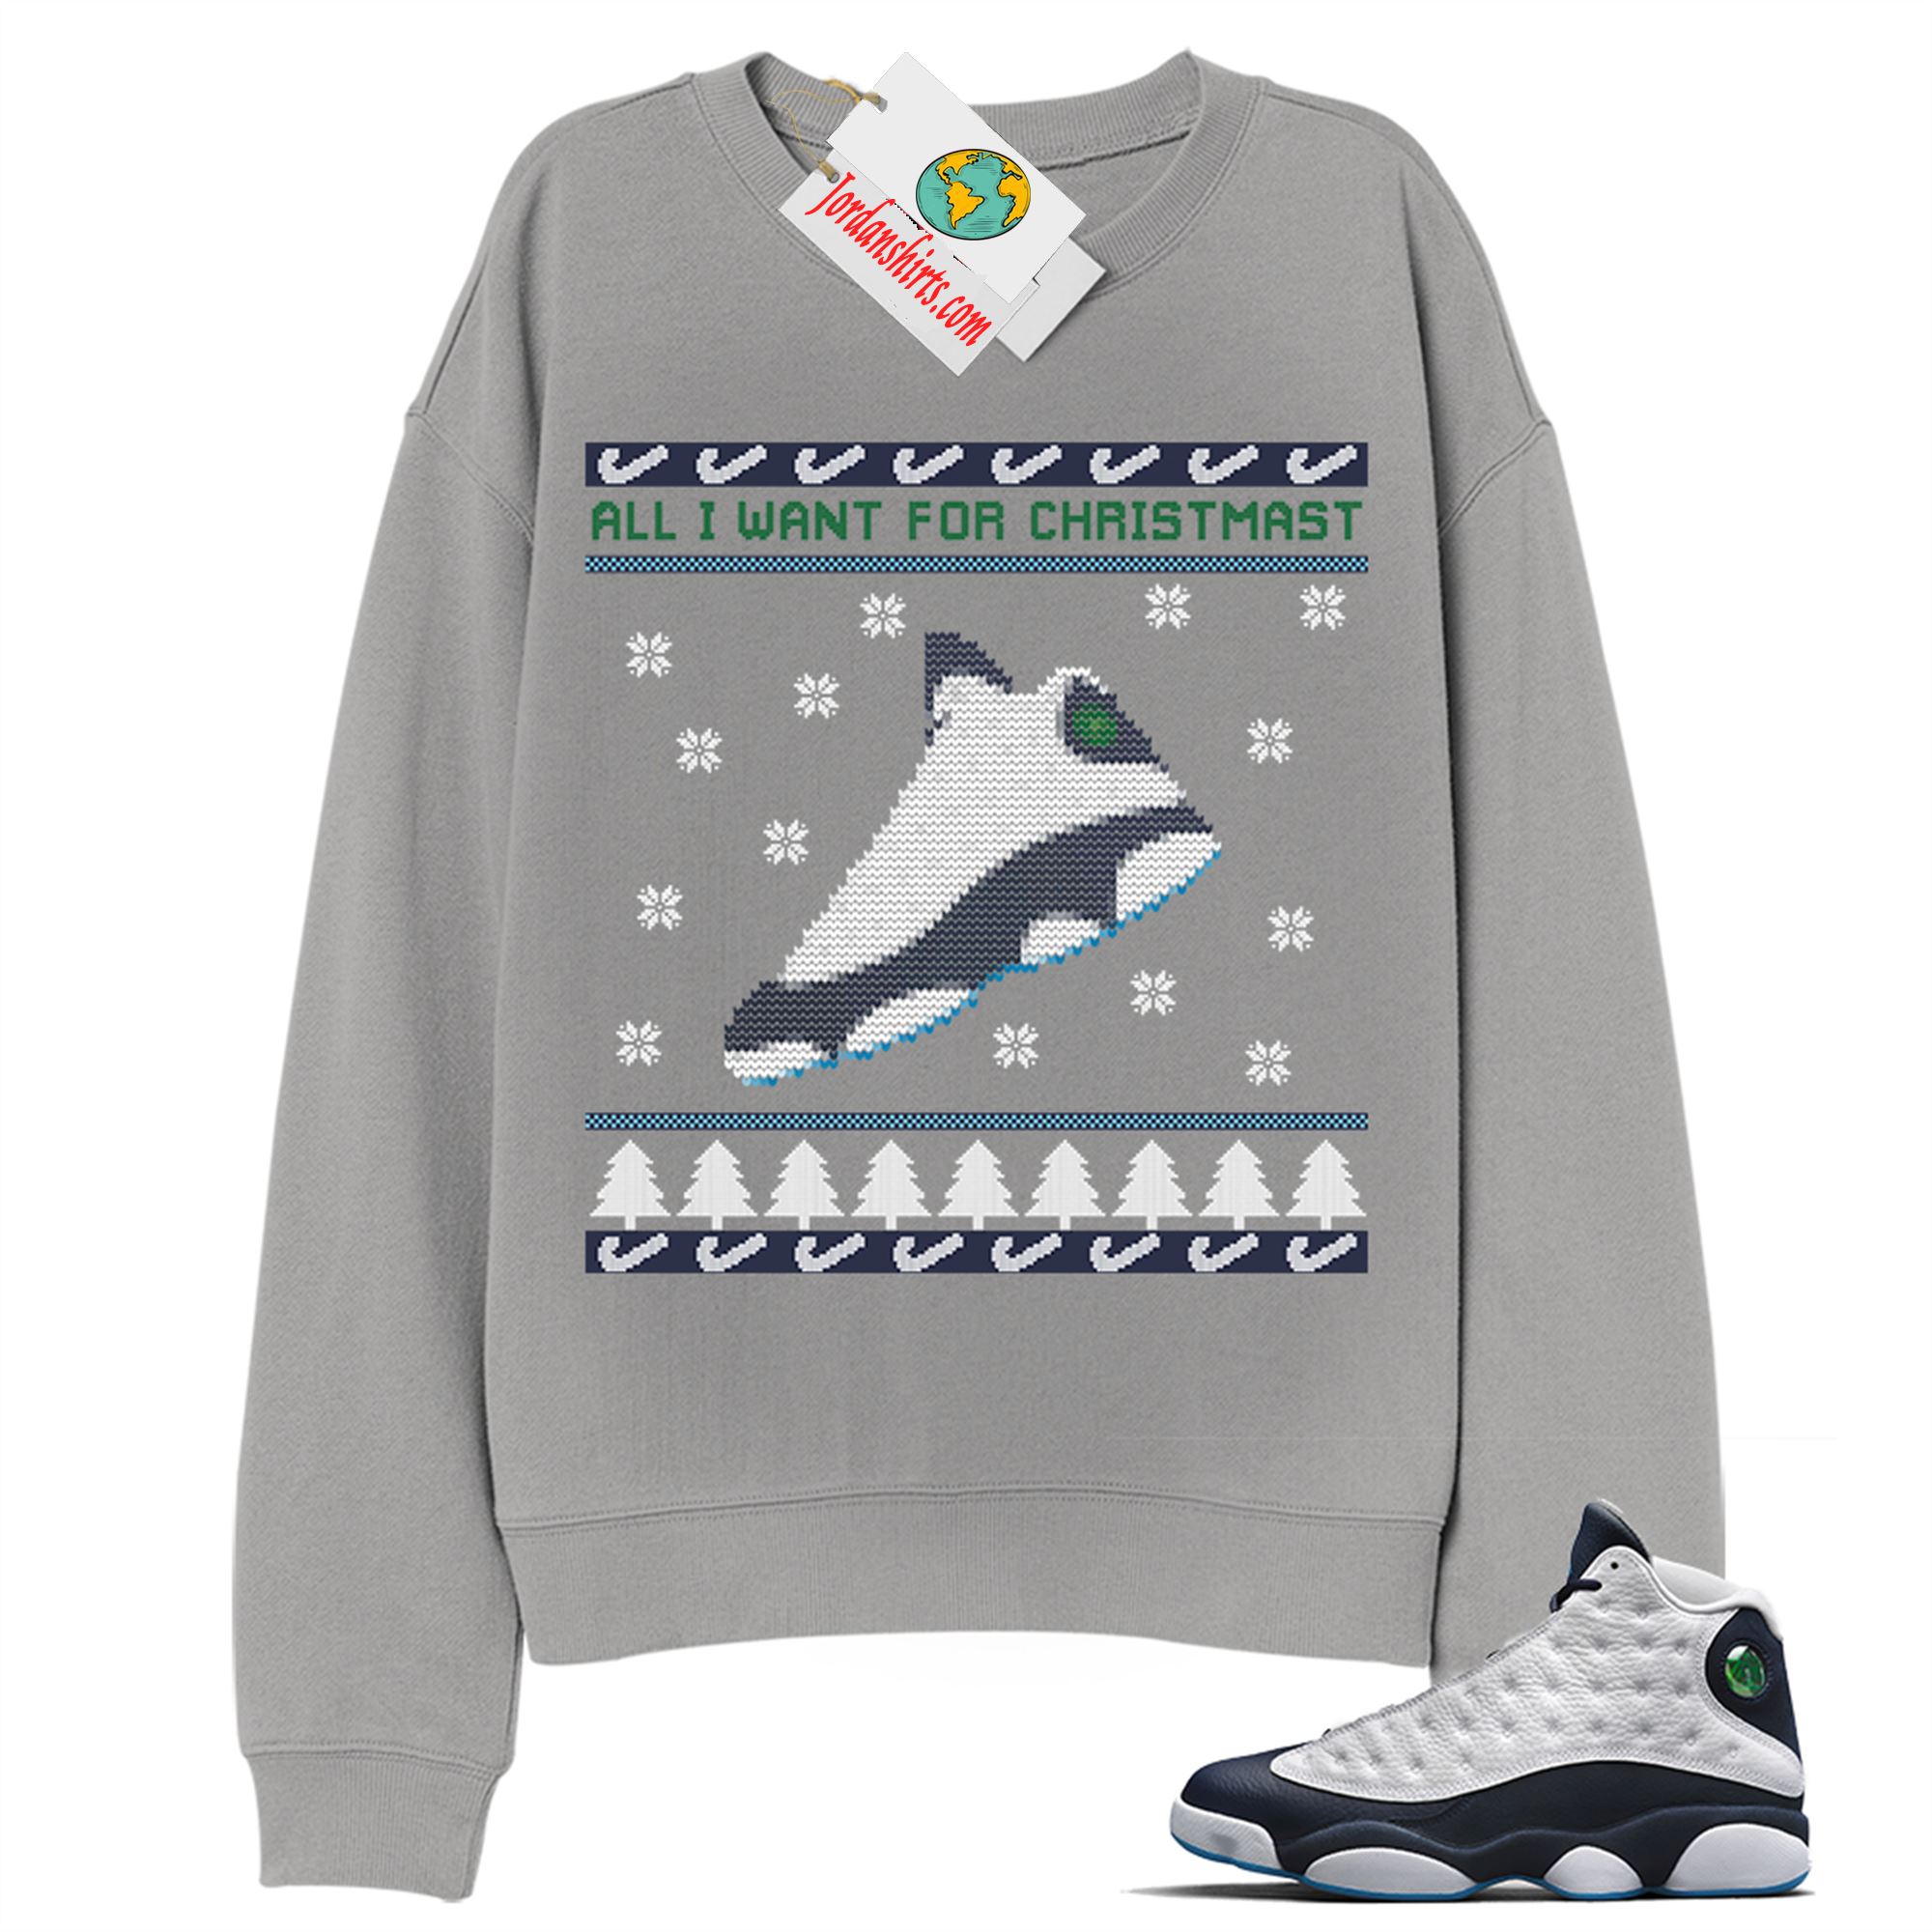 Jordan 13 Sweatshirt, Sneaker Ugly Christmas Shirt Grey Sweatshirt Air Jordan 13 Obsidian 13s Size Up To 5xl